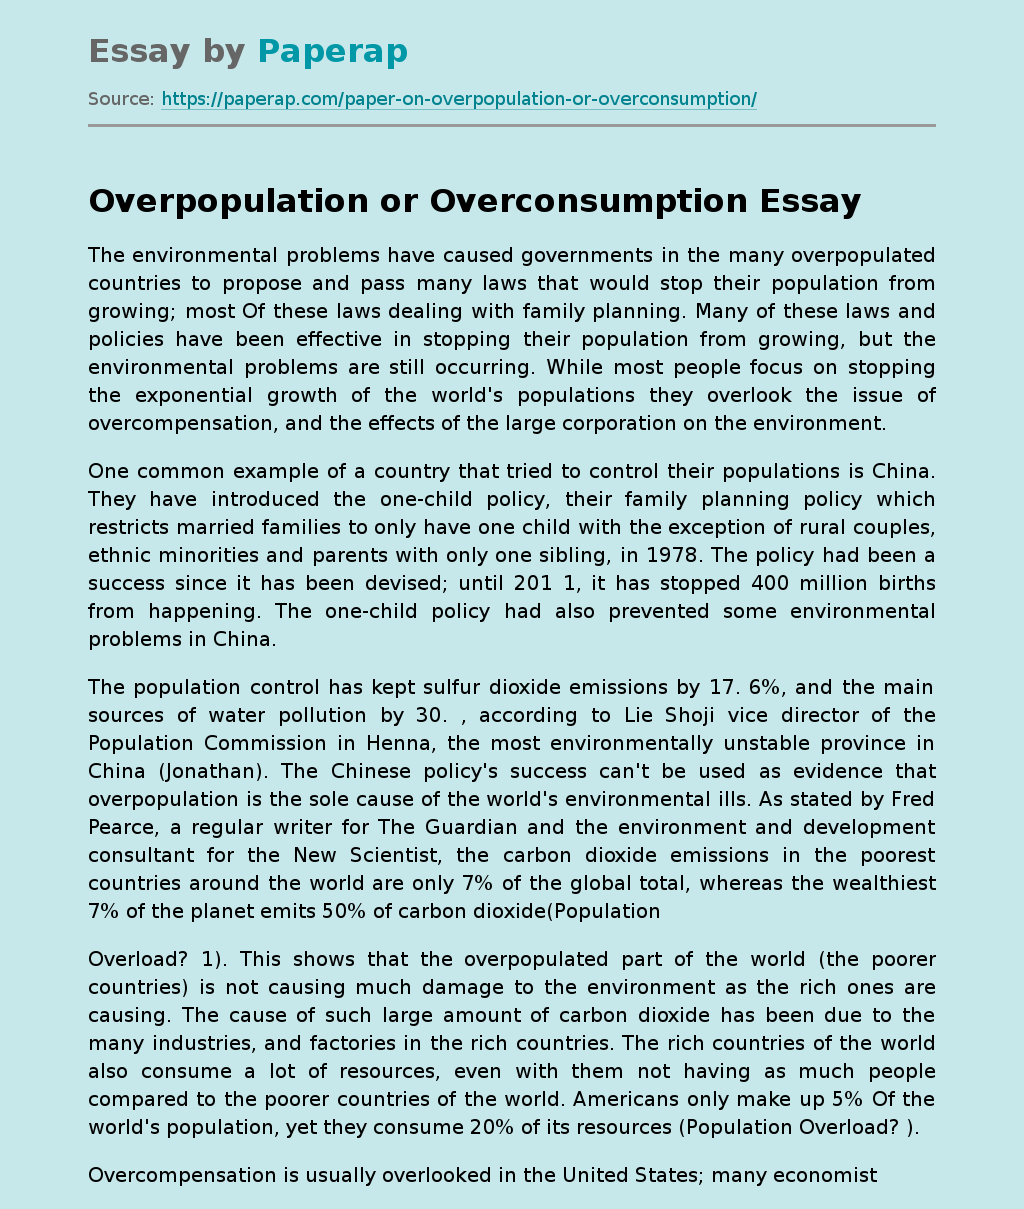 Overpopulation or Overconsumption